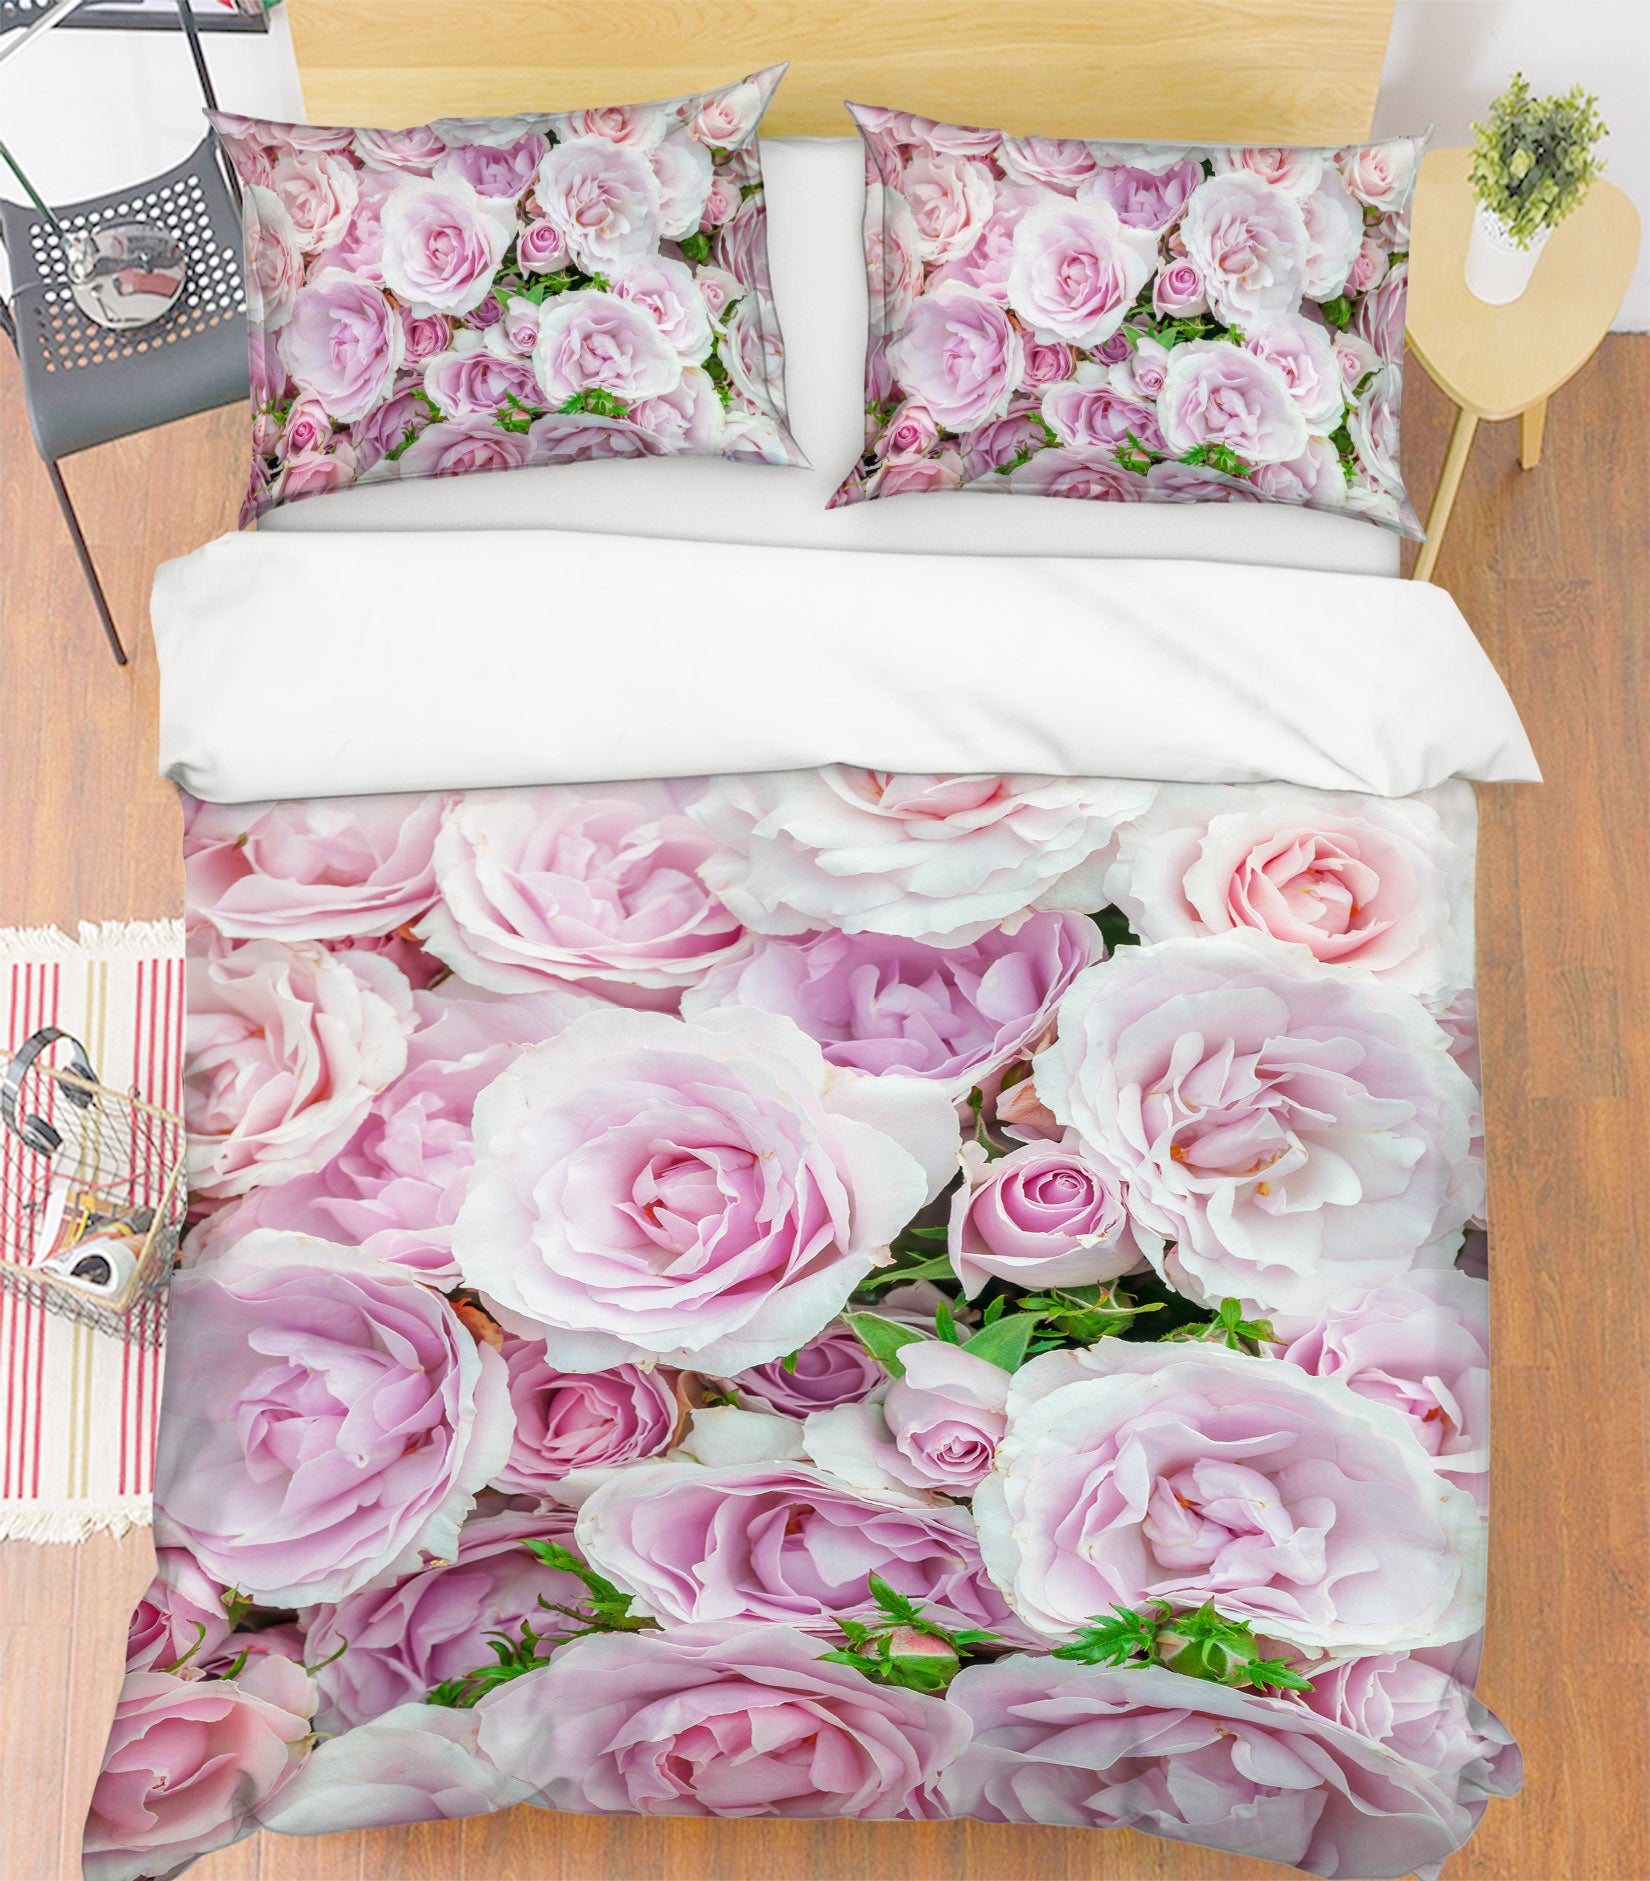 3D Pink Roses 7122 Assaf Frank Bedding Bed Pillowcases Quilt Cover Duvet Cover